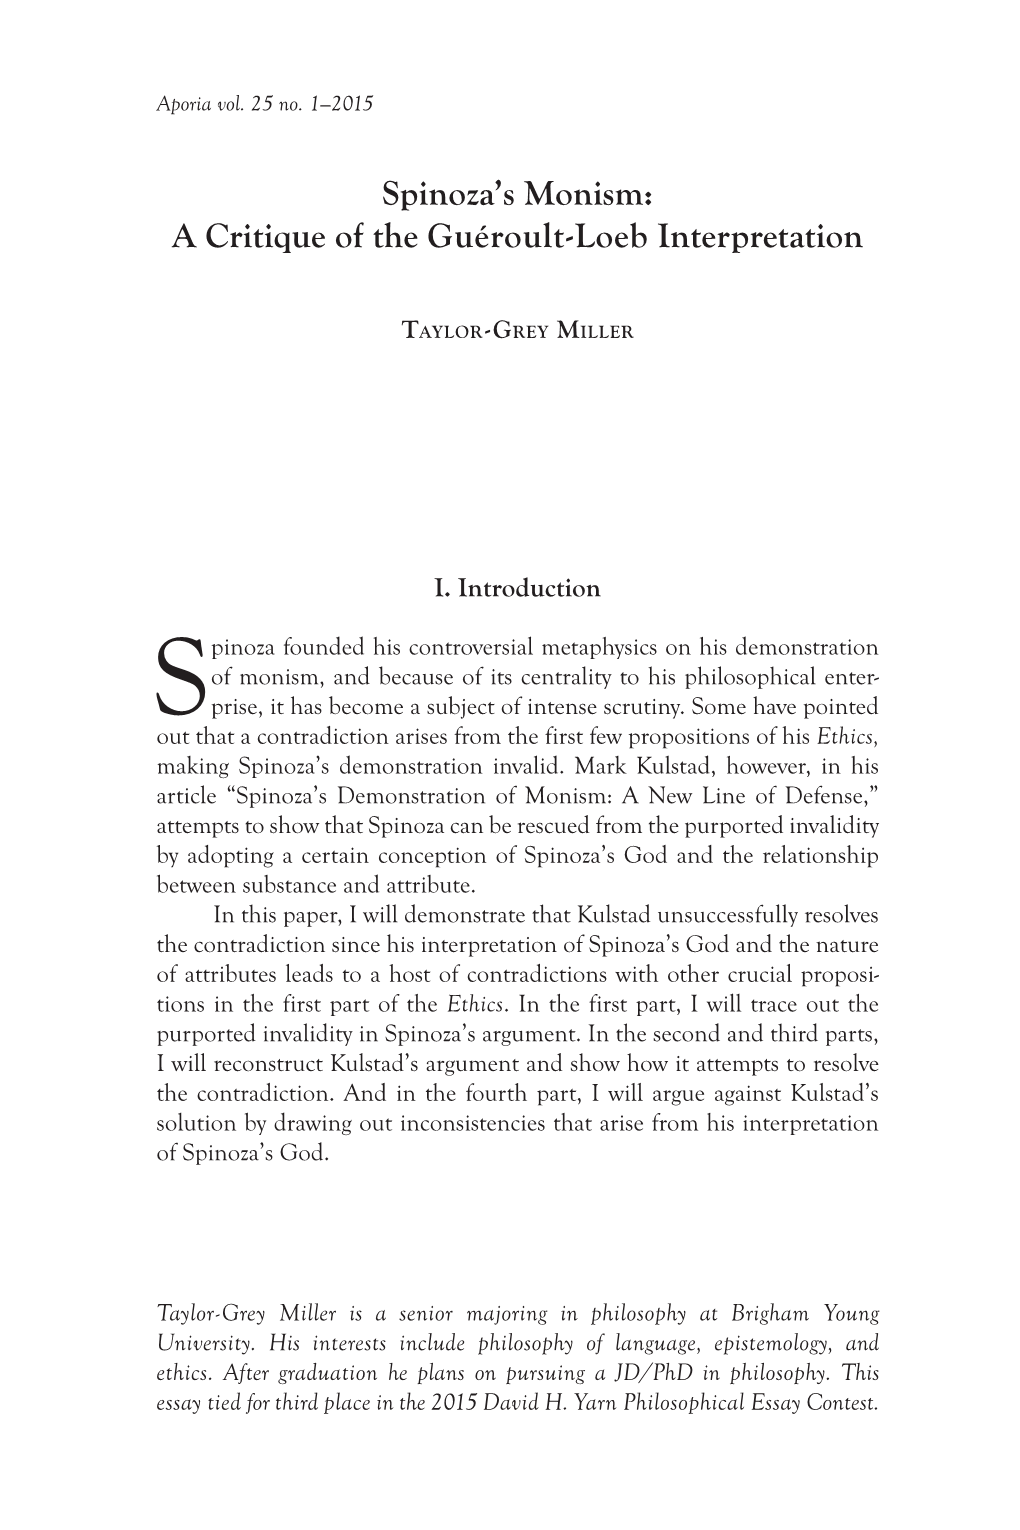 Spinoza's Monism: a Critique of the Guéroult-Loeb Interpretation